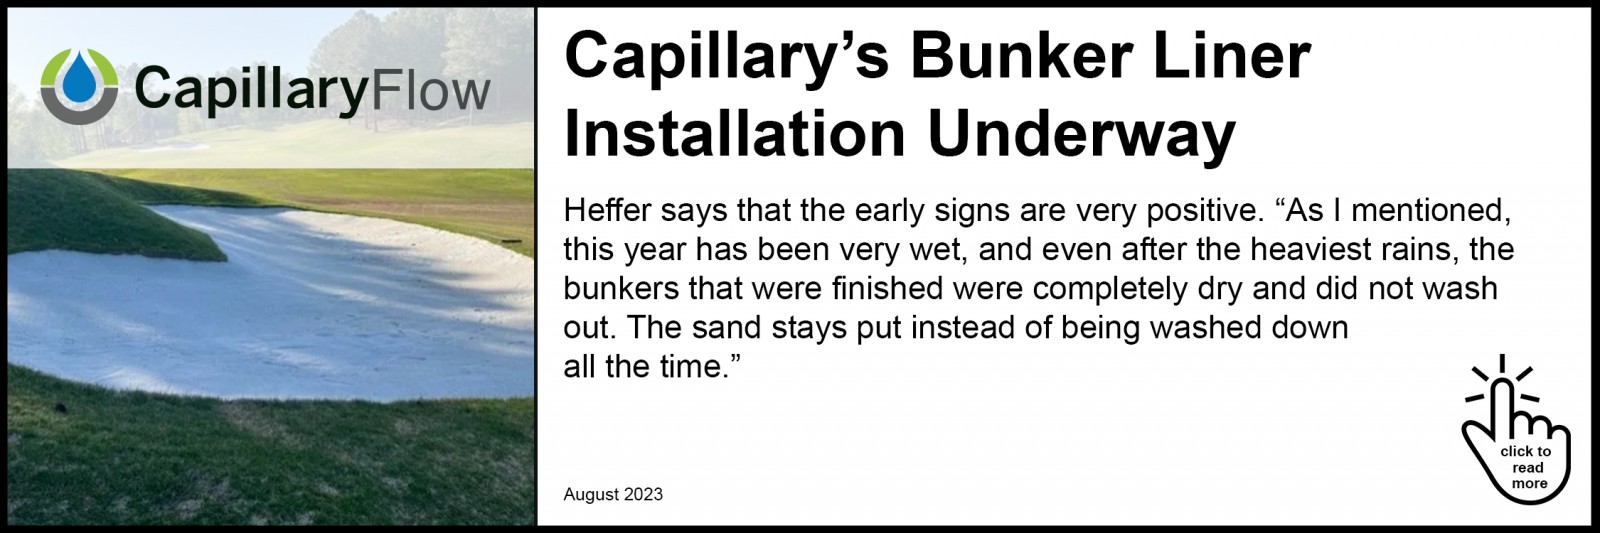 Capillary’s Bunker Liner Installation Underway